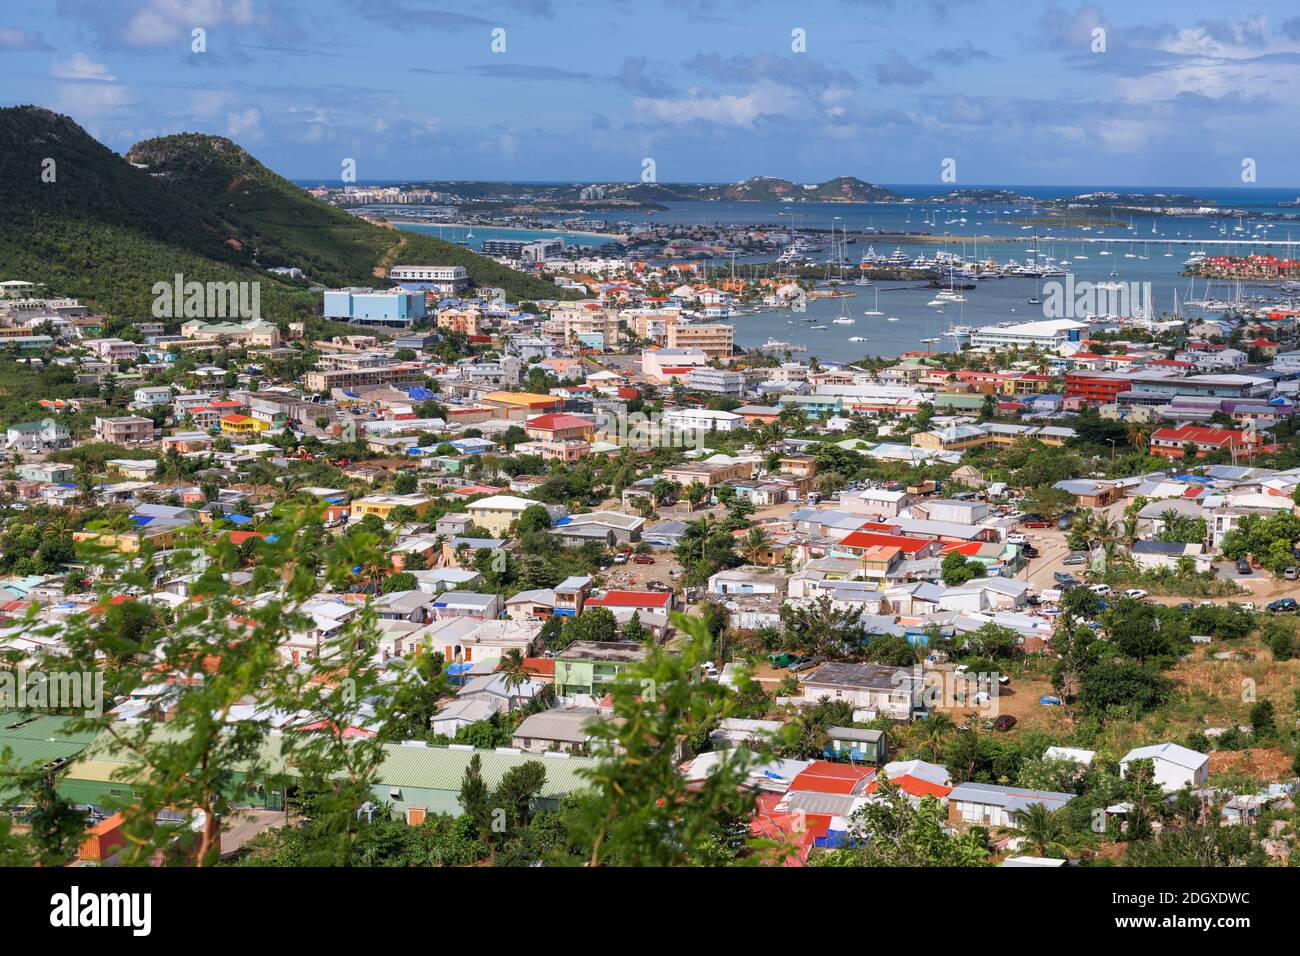 Sint Maarten coastal views in the Caribbean. Stock Photo